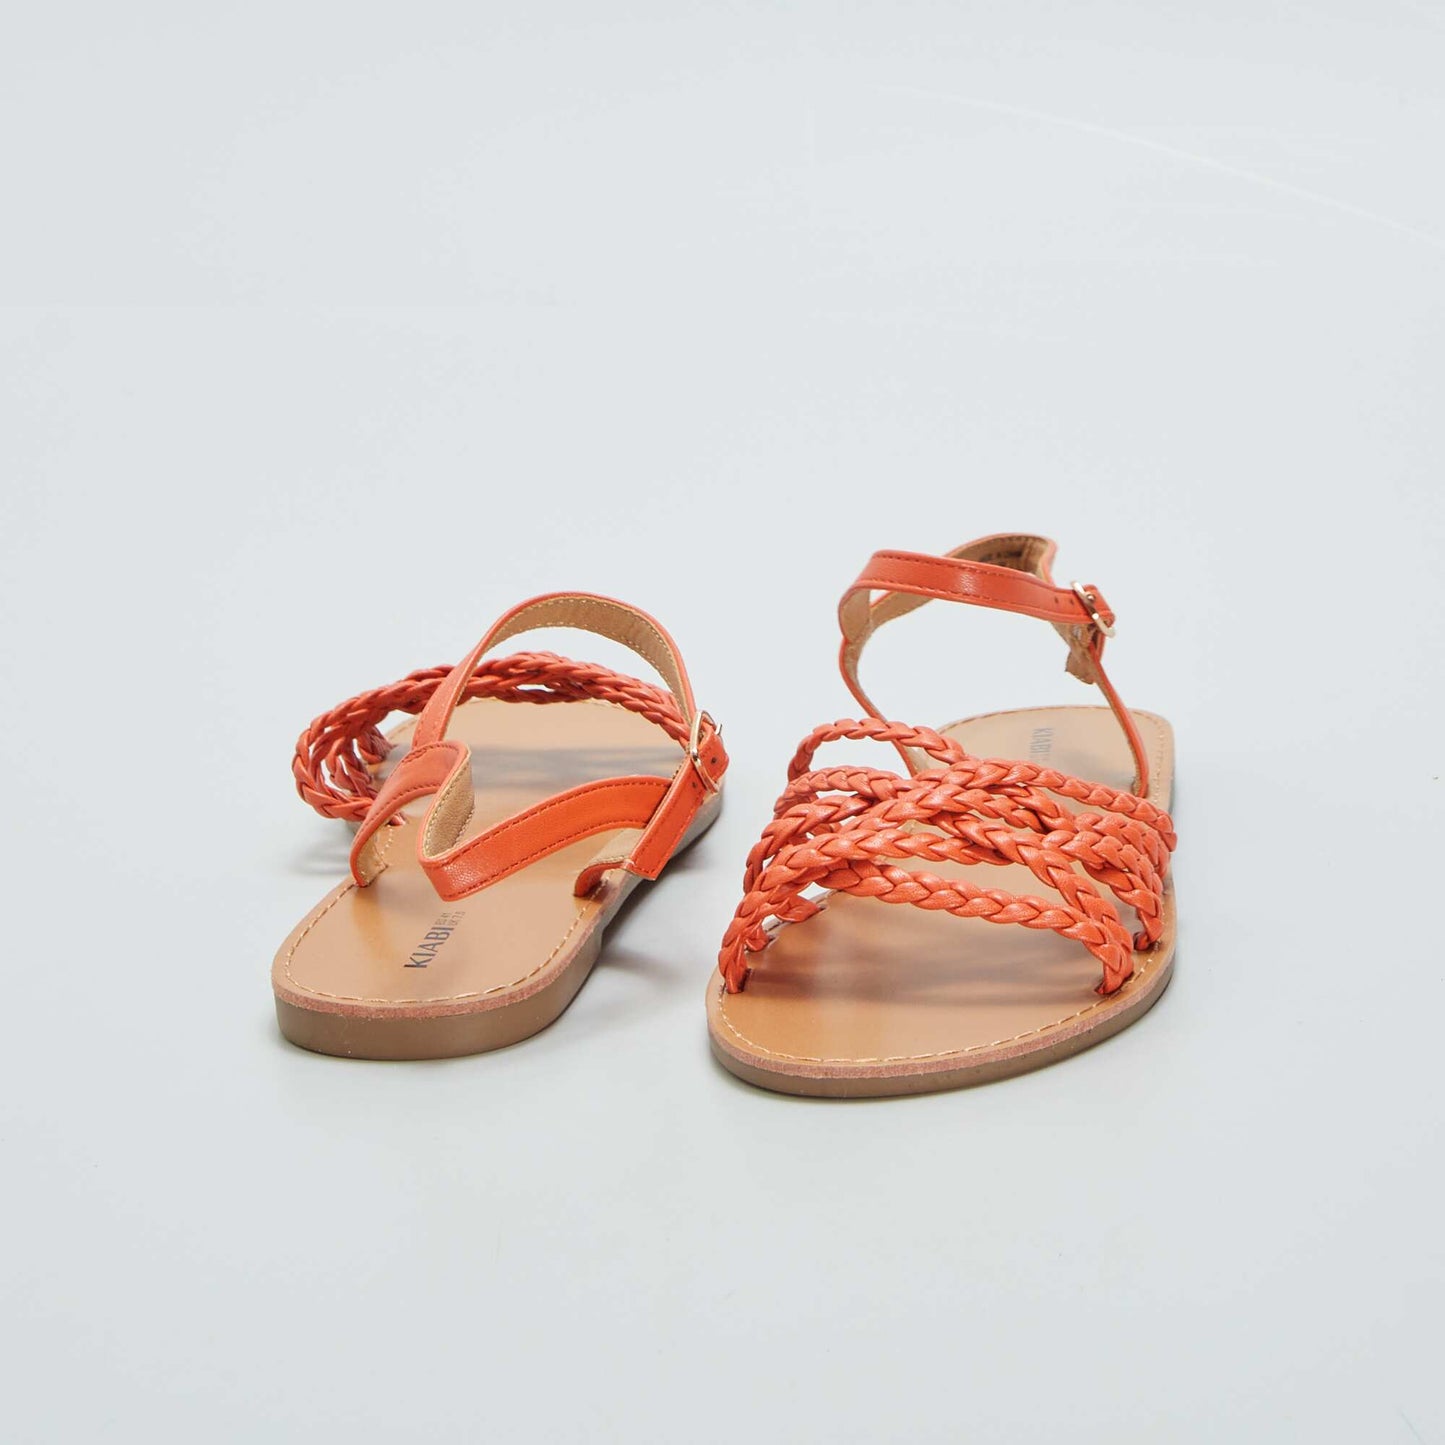 Flat sandals with braided straps ORANGE